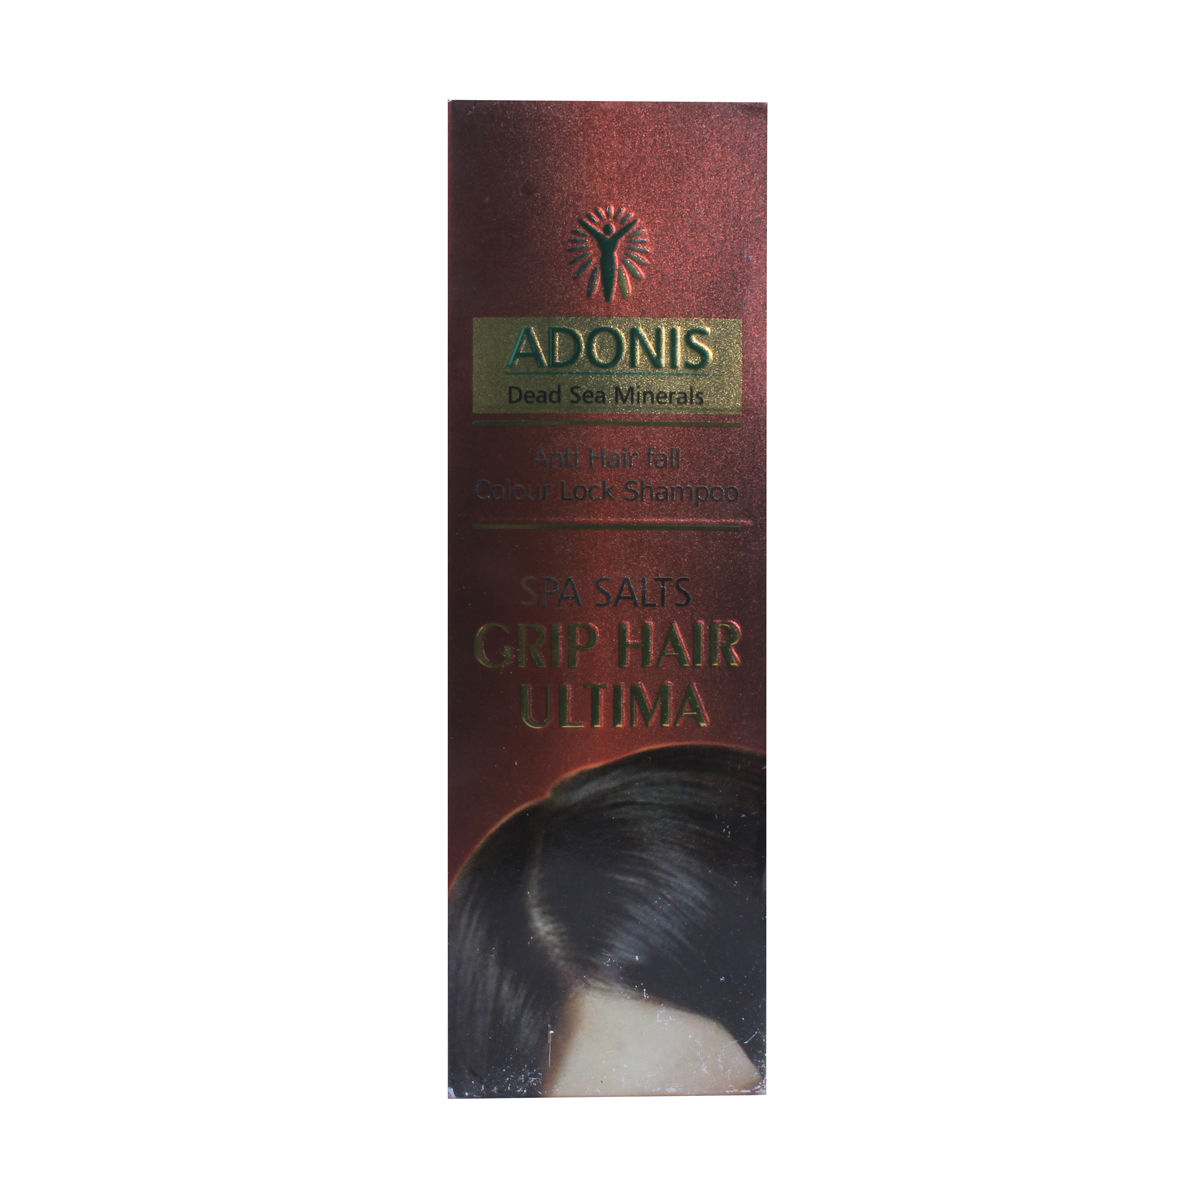 Buy Adonis Grip Hair Hairfall Control Shampoo, 200 ml Online